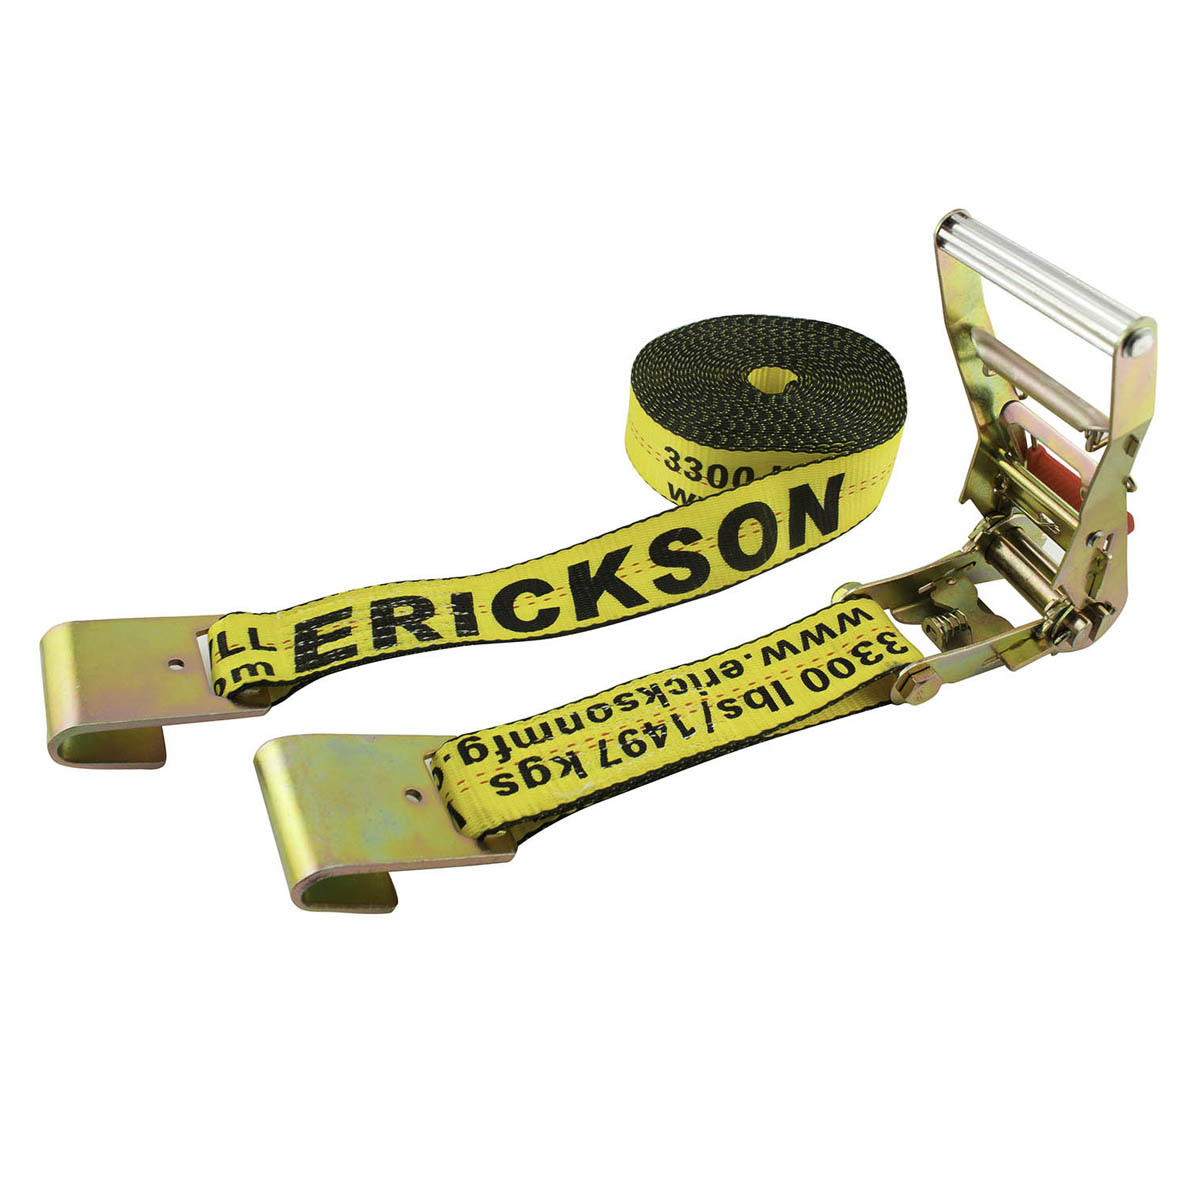 Erickson 2" x 30' Long Handle Ratchet Strap